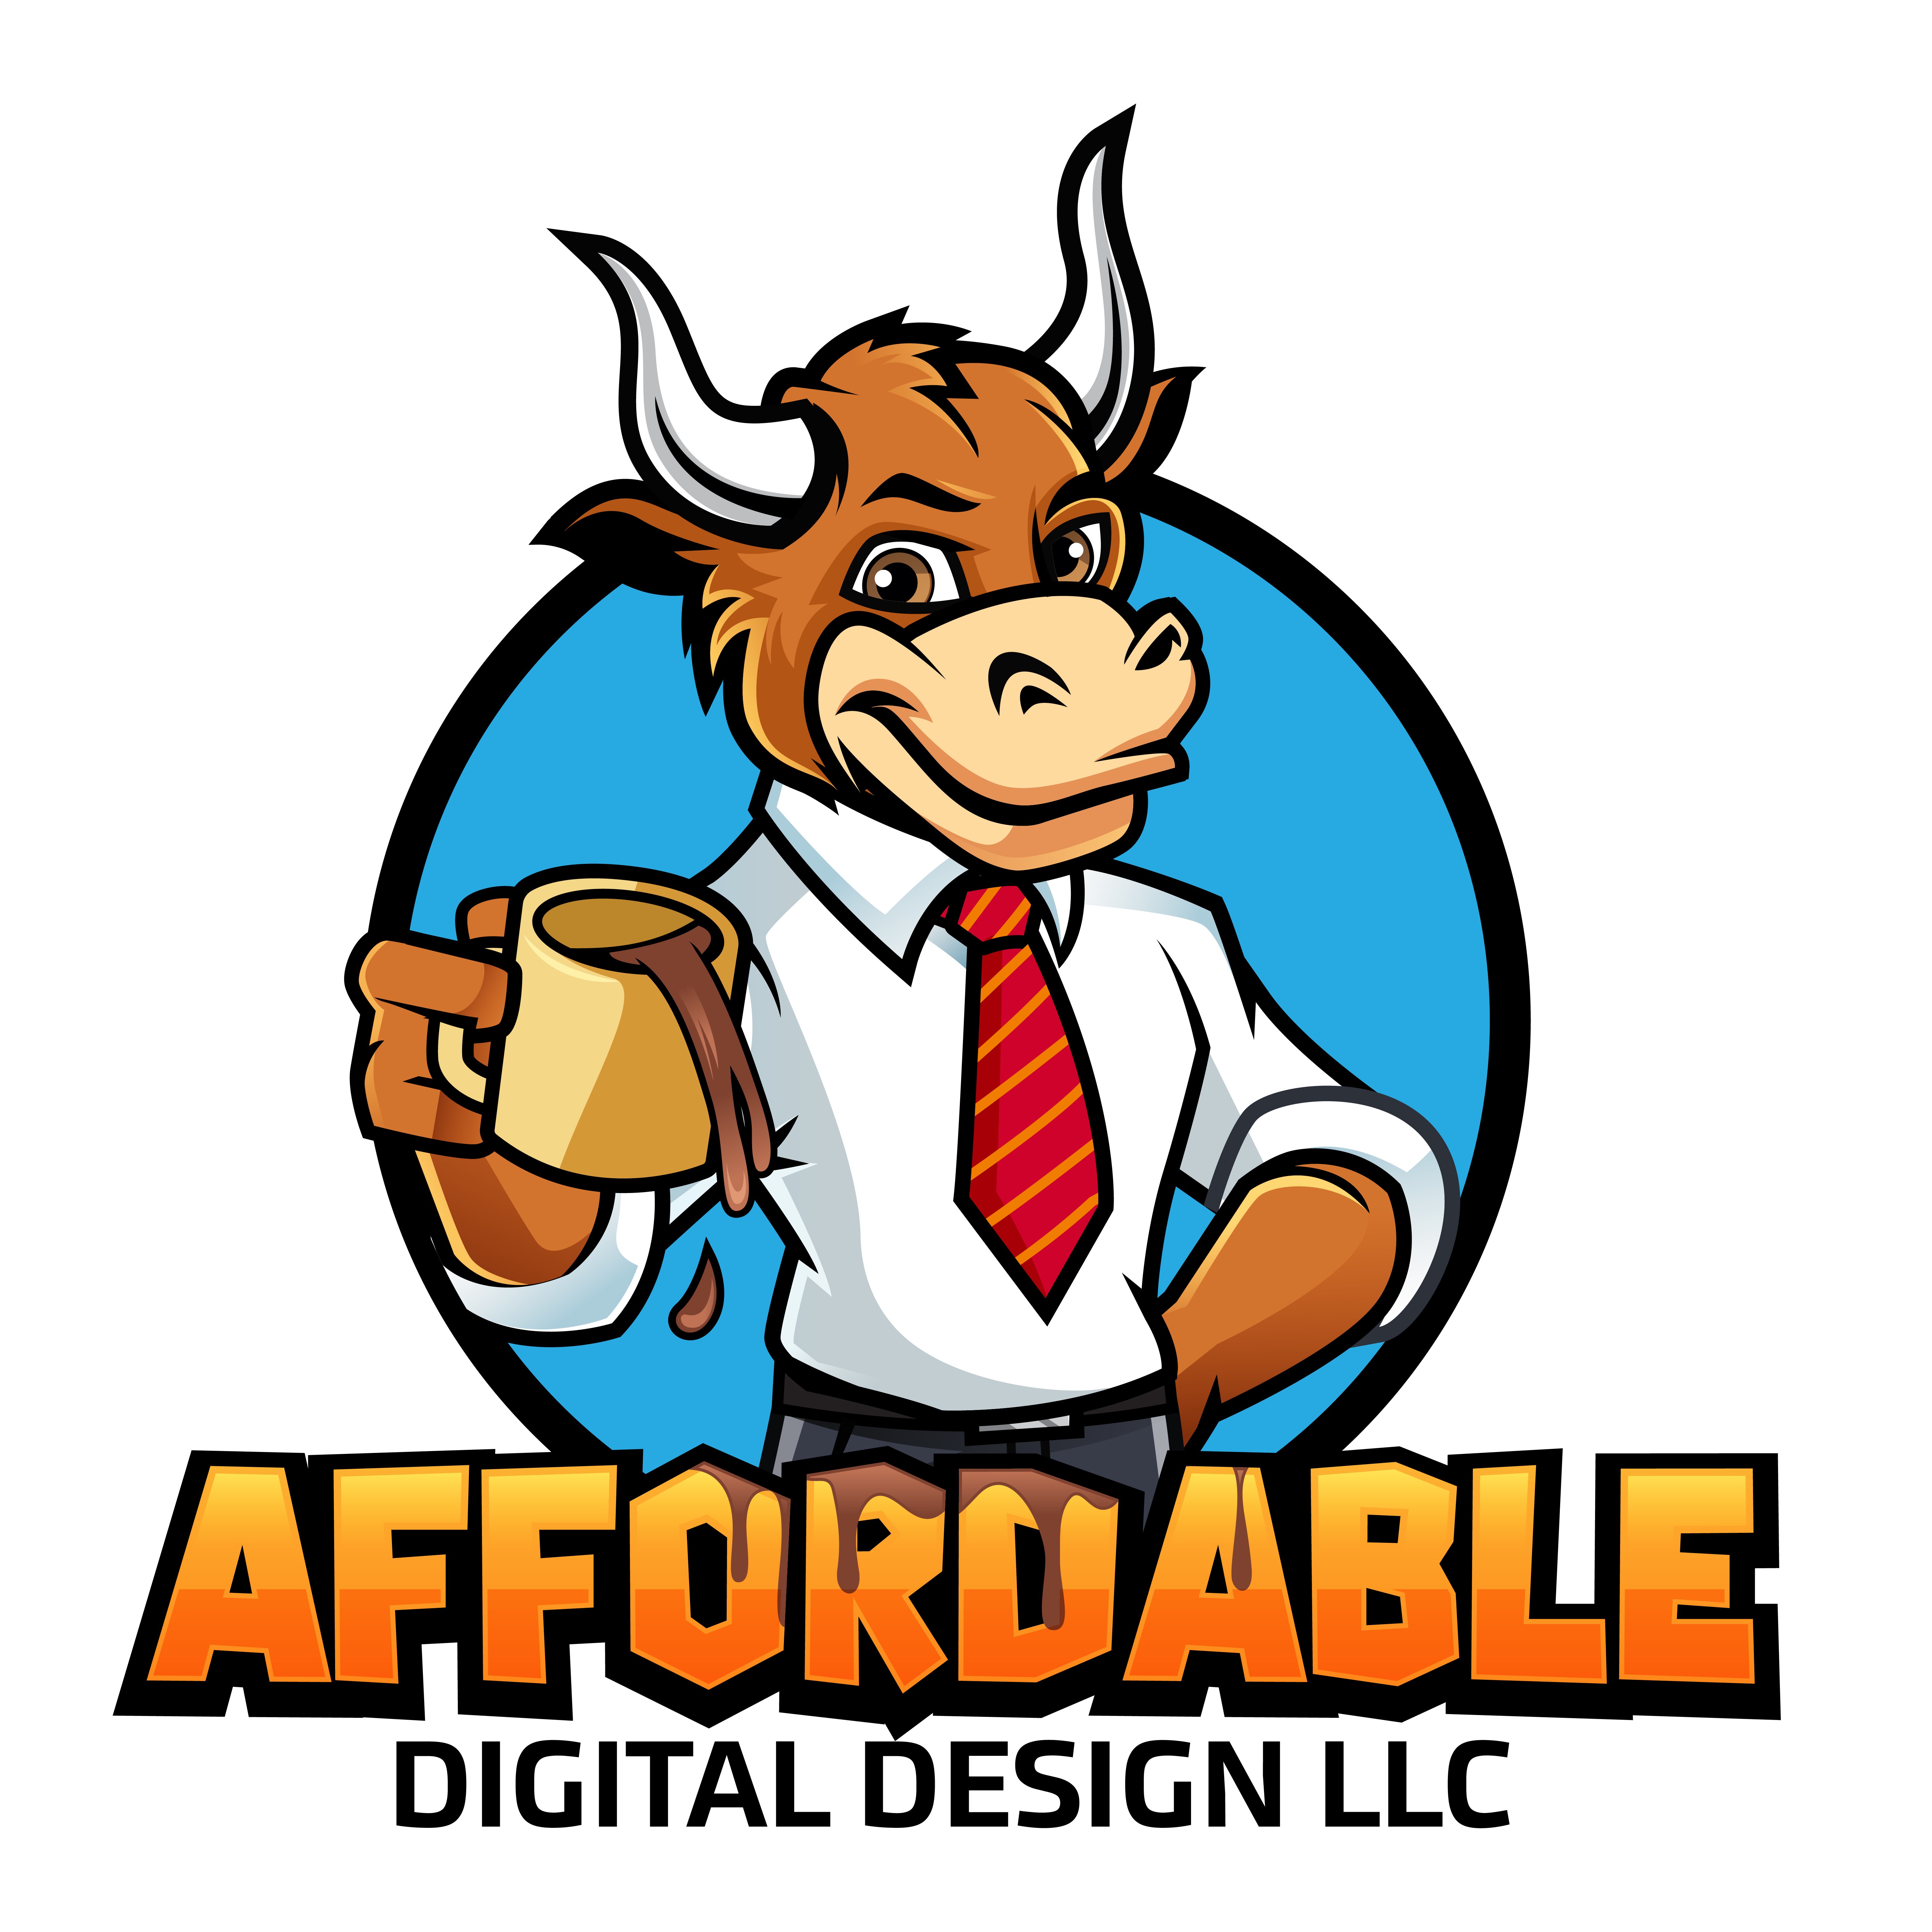 Affordable Digital Design LLC